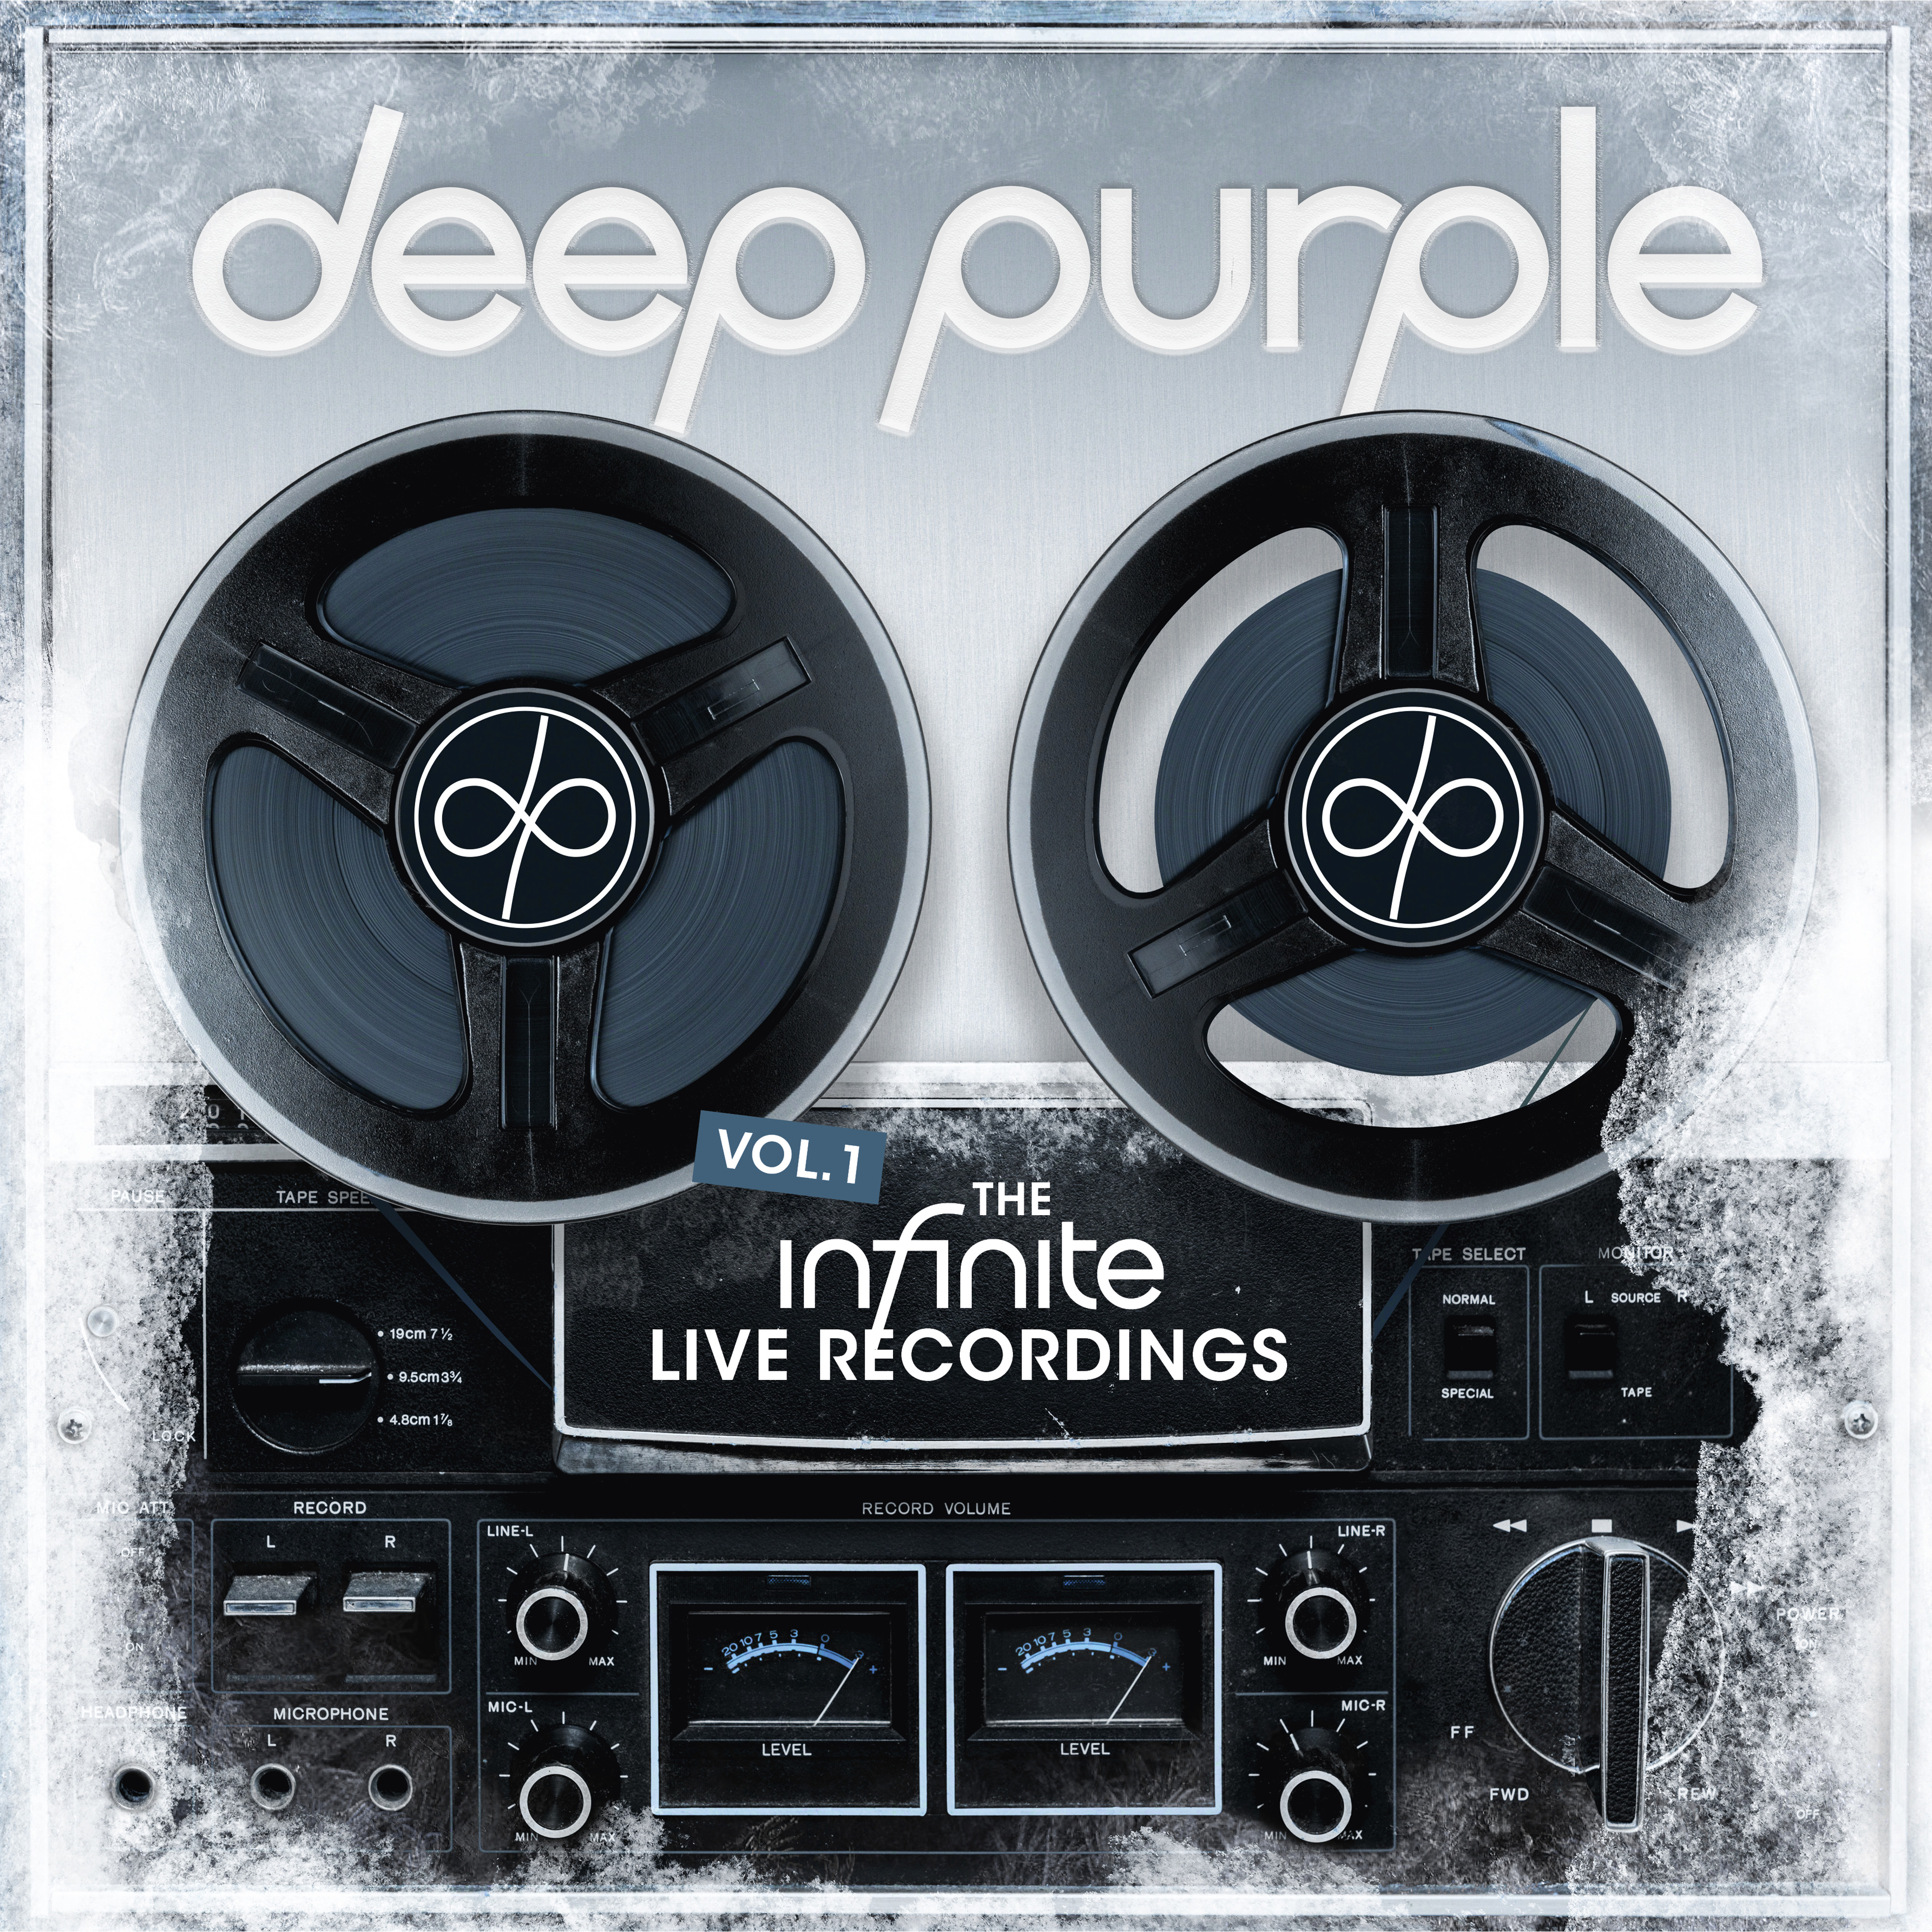 Deep Purple - The InFinite Live Recordings Vol 1